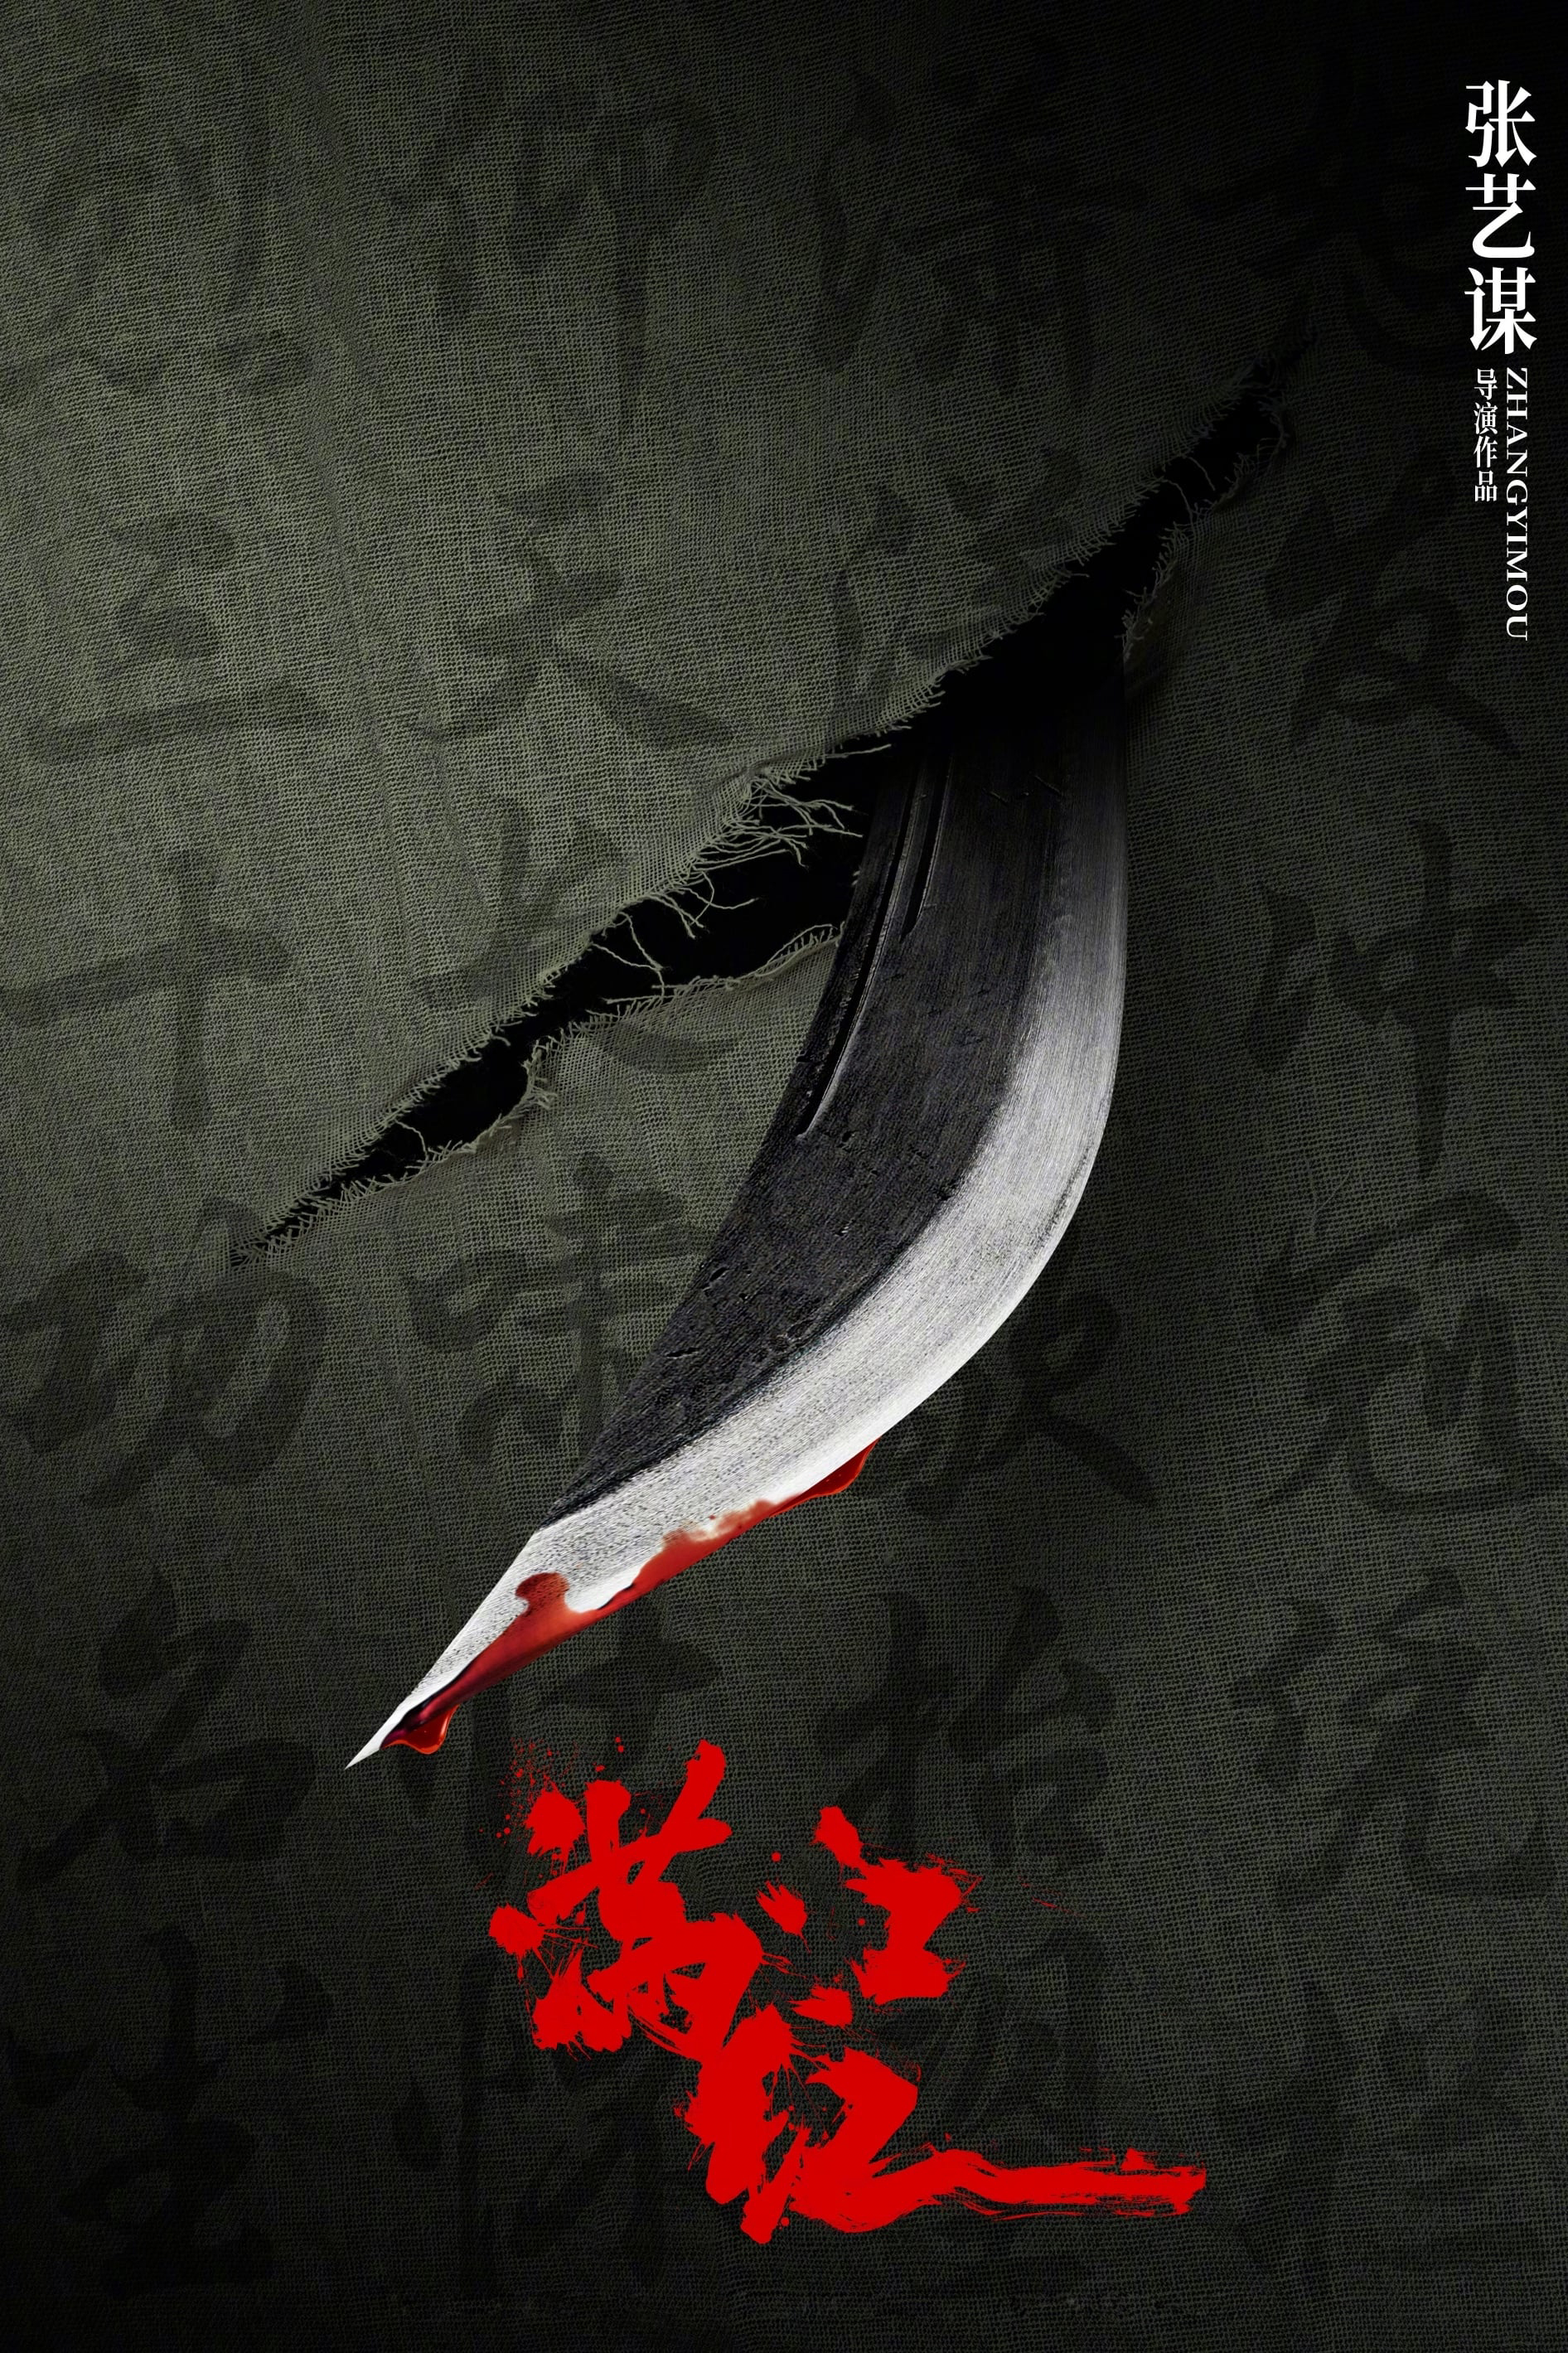 Poster Phim Mãn giang hồng (Full River Red)